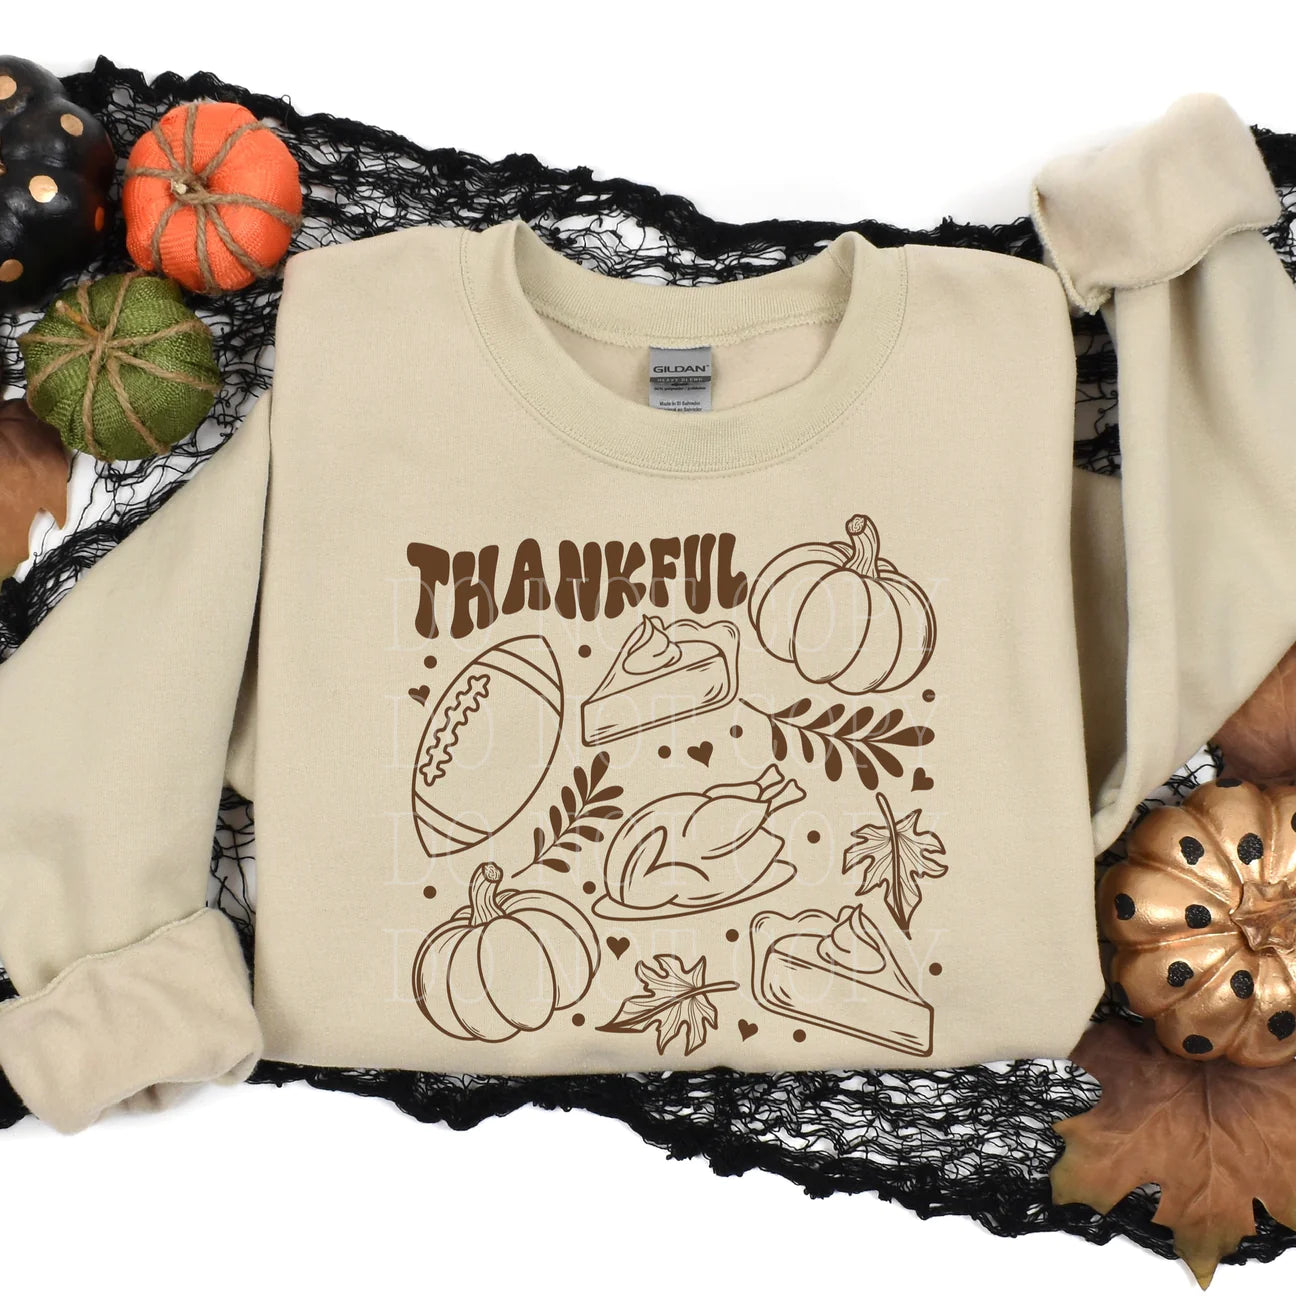 "Thankful" Thanksgiving Sweatshirt or T-shirt (shown on "Sand")